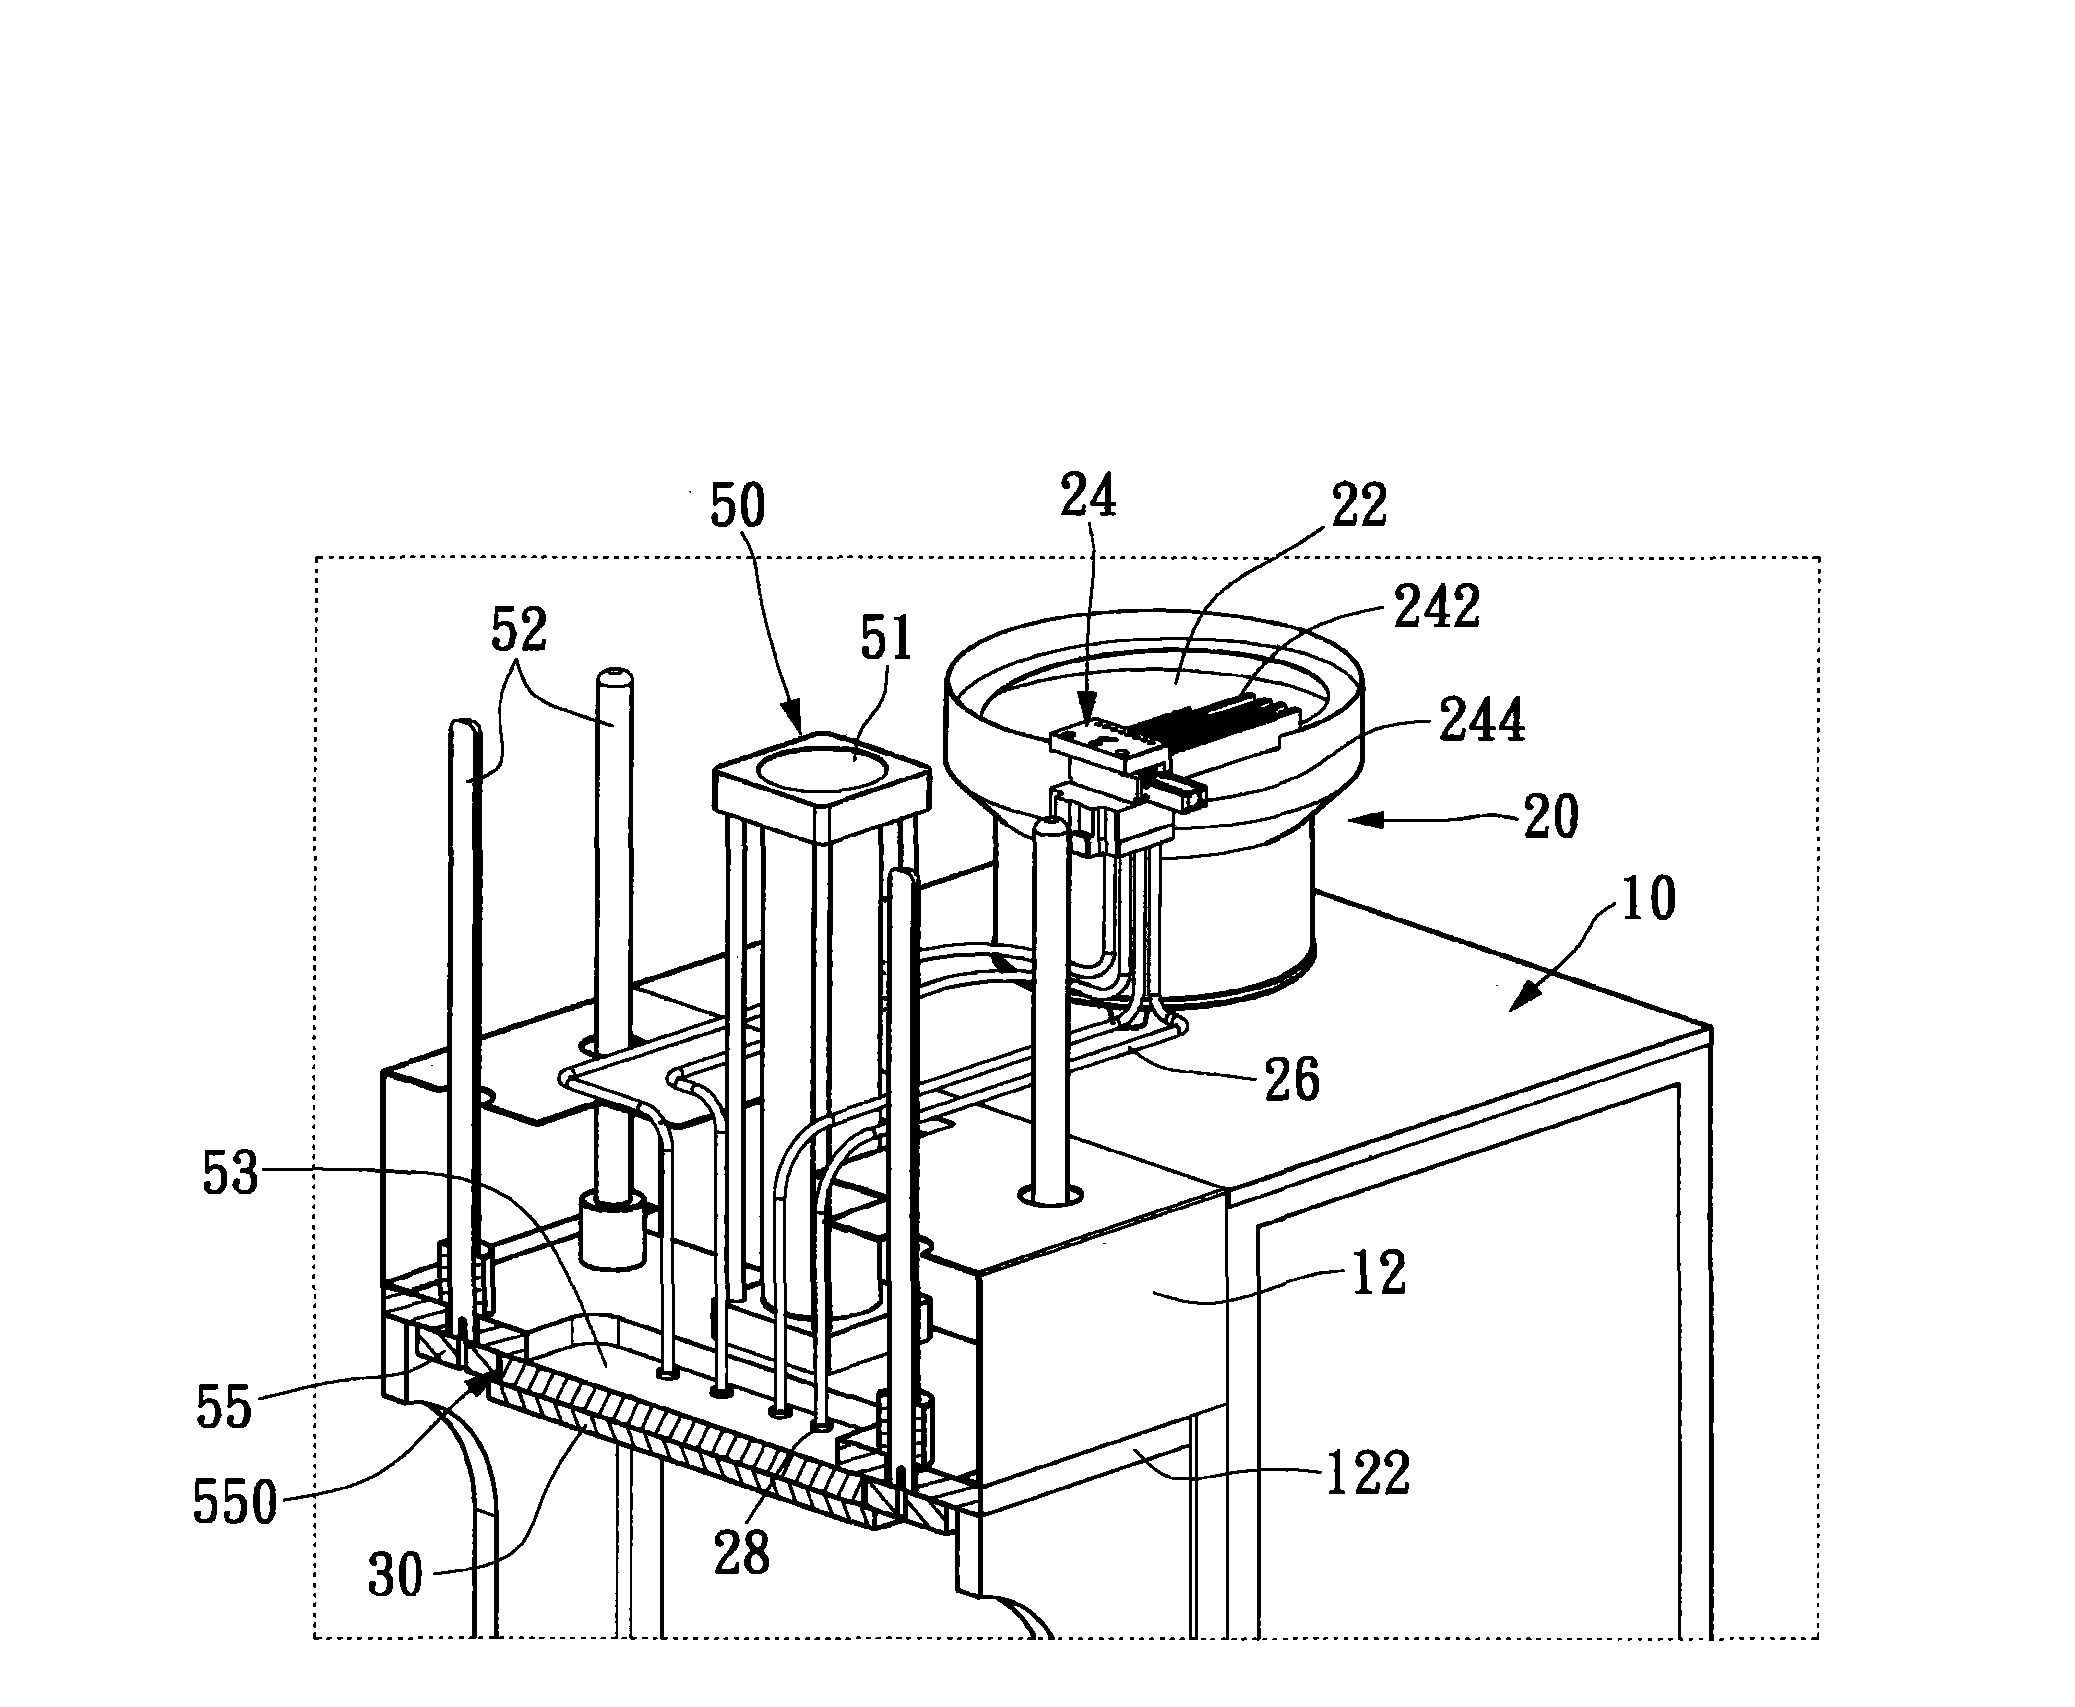 Automatic loading and setting blind rivet mechanism